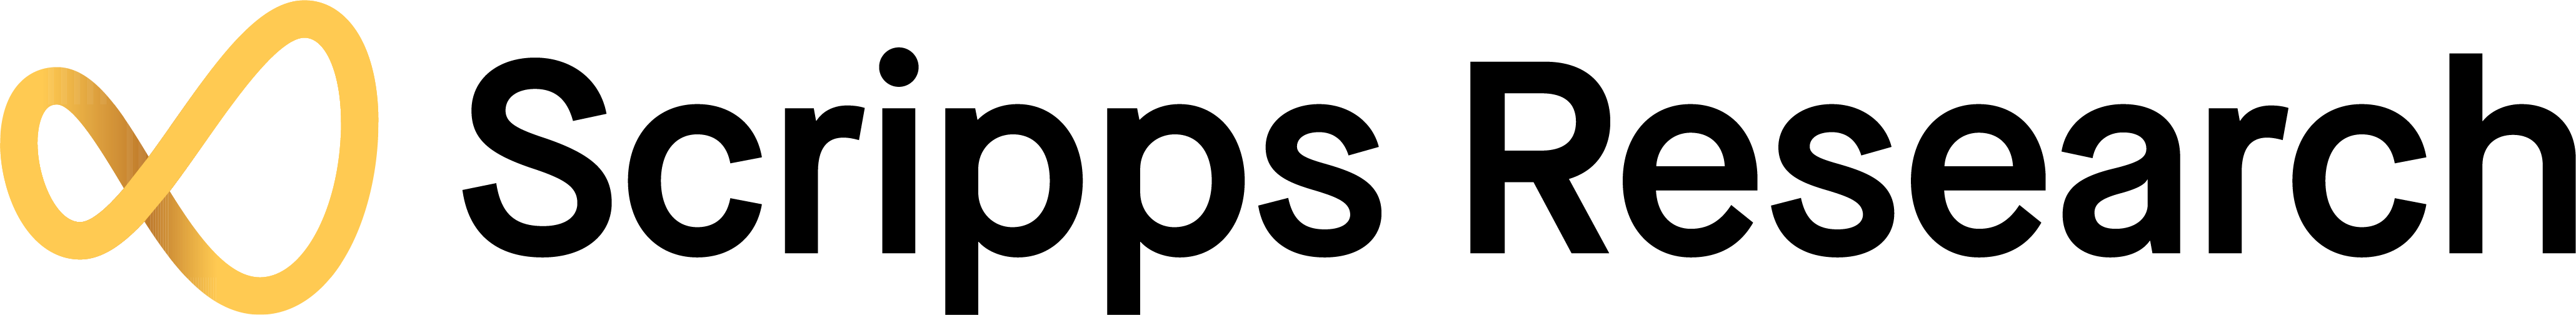 scripps-logo_black